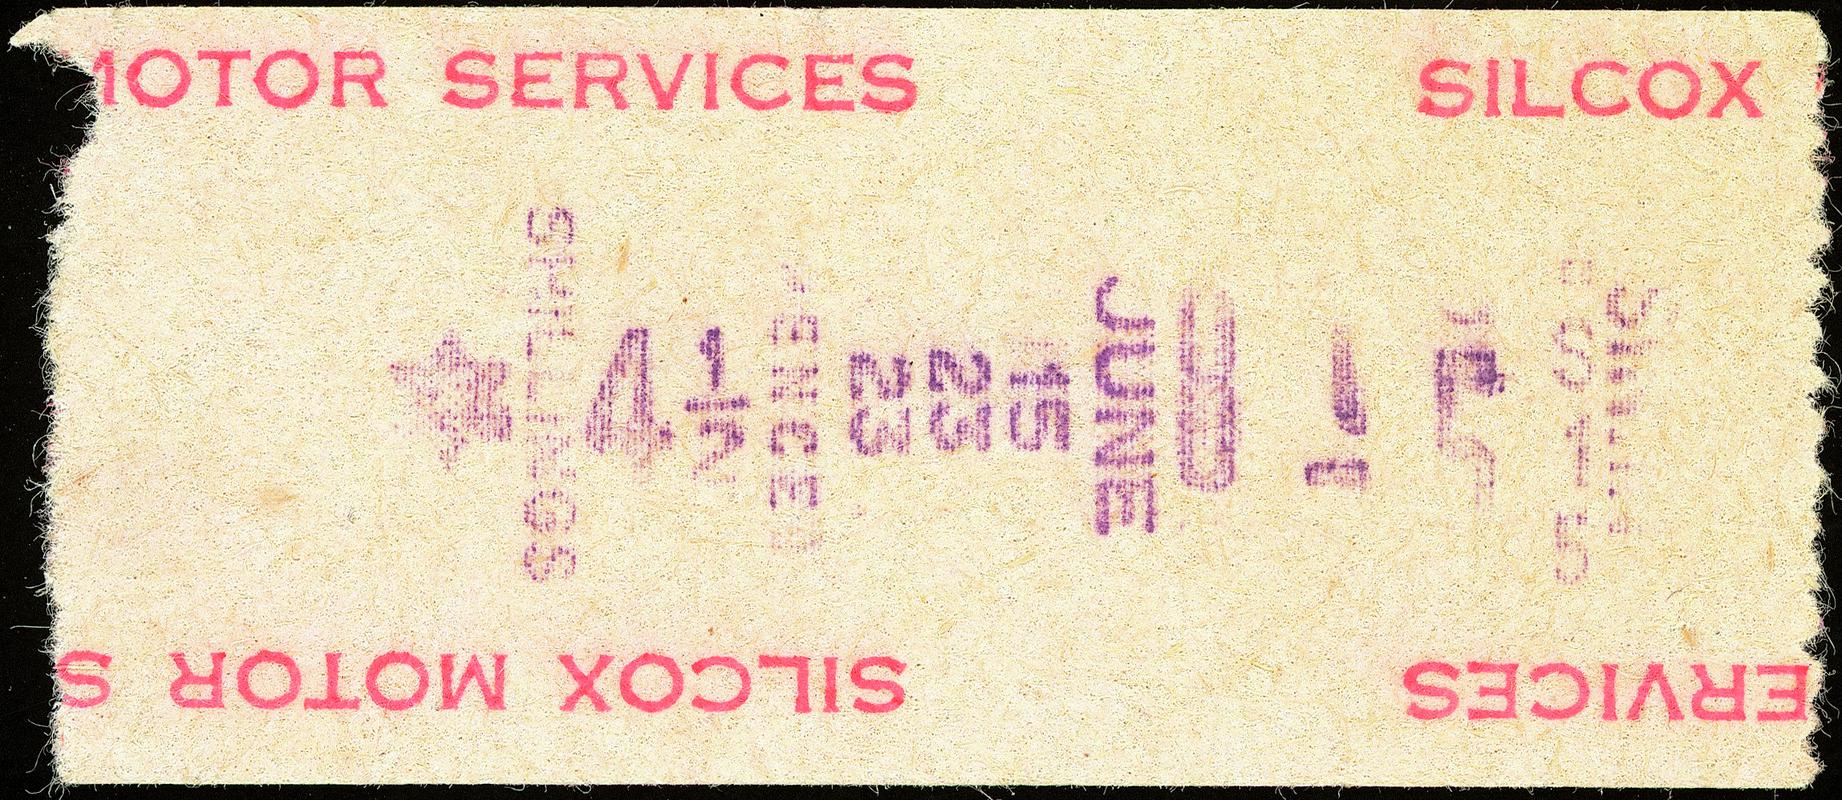 Silcox Motor Services bus ticket